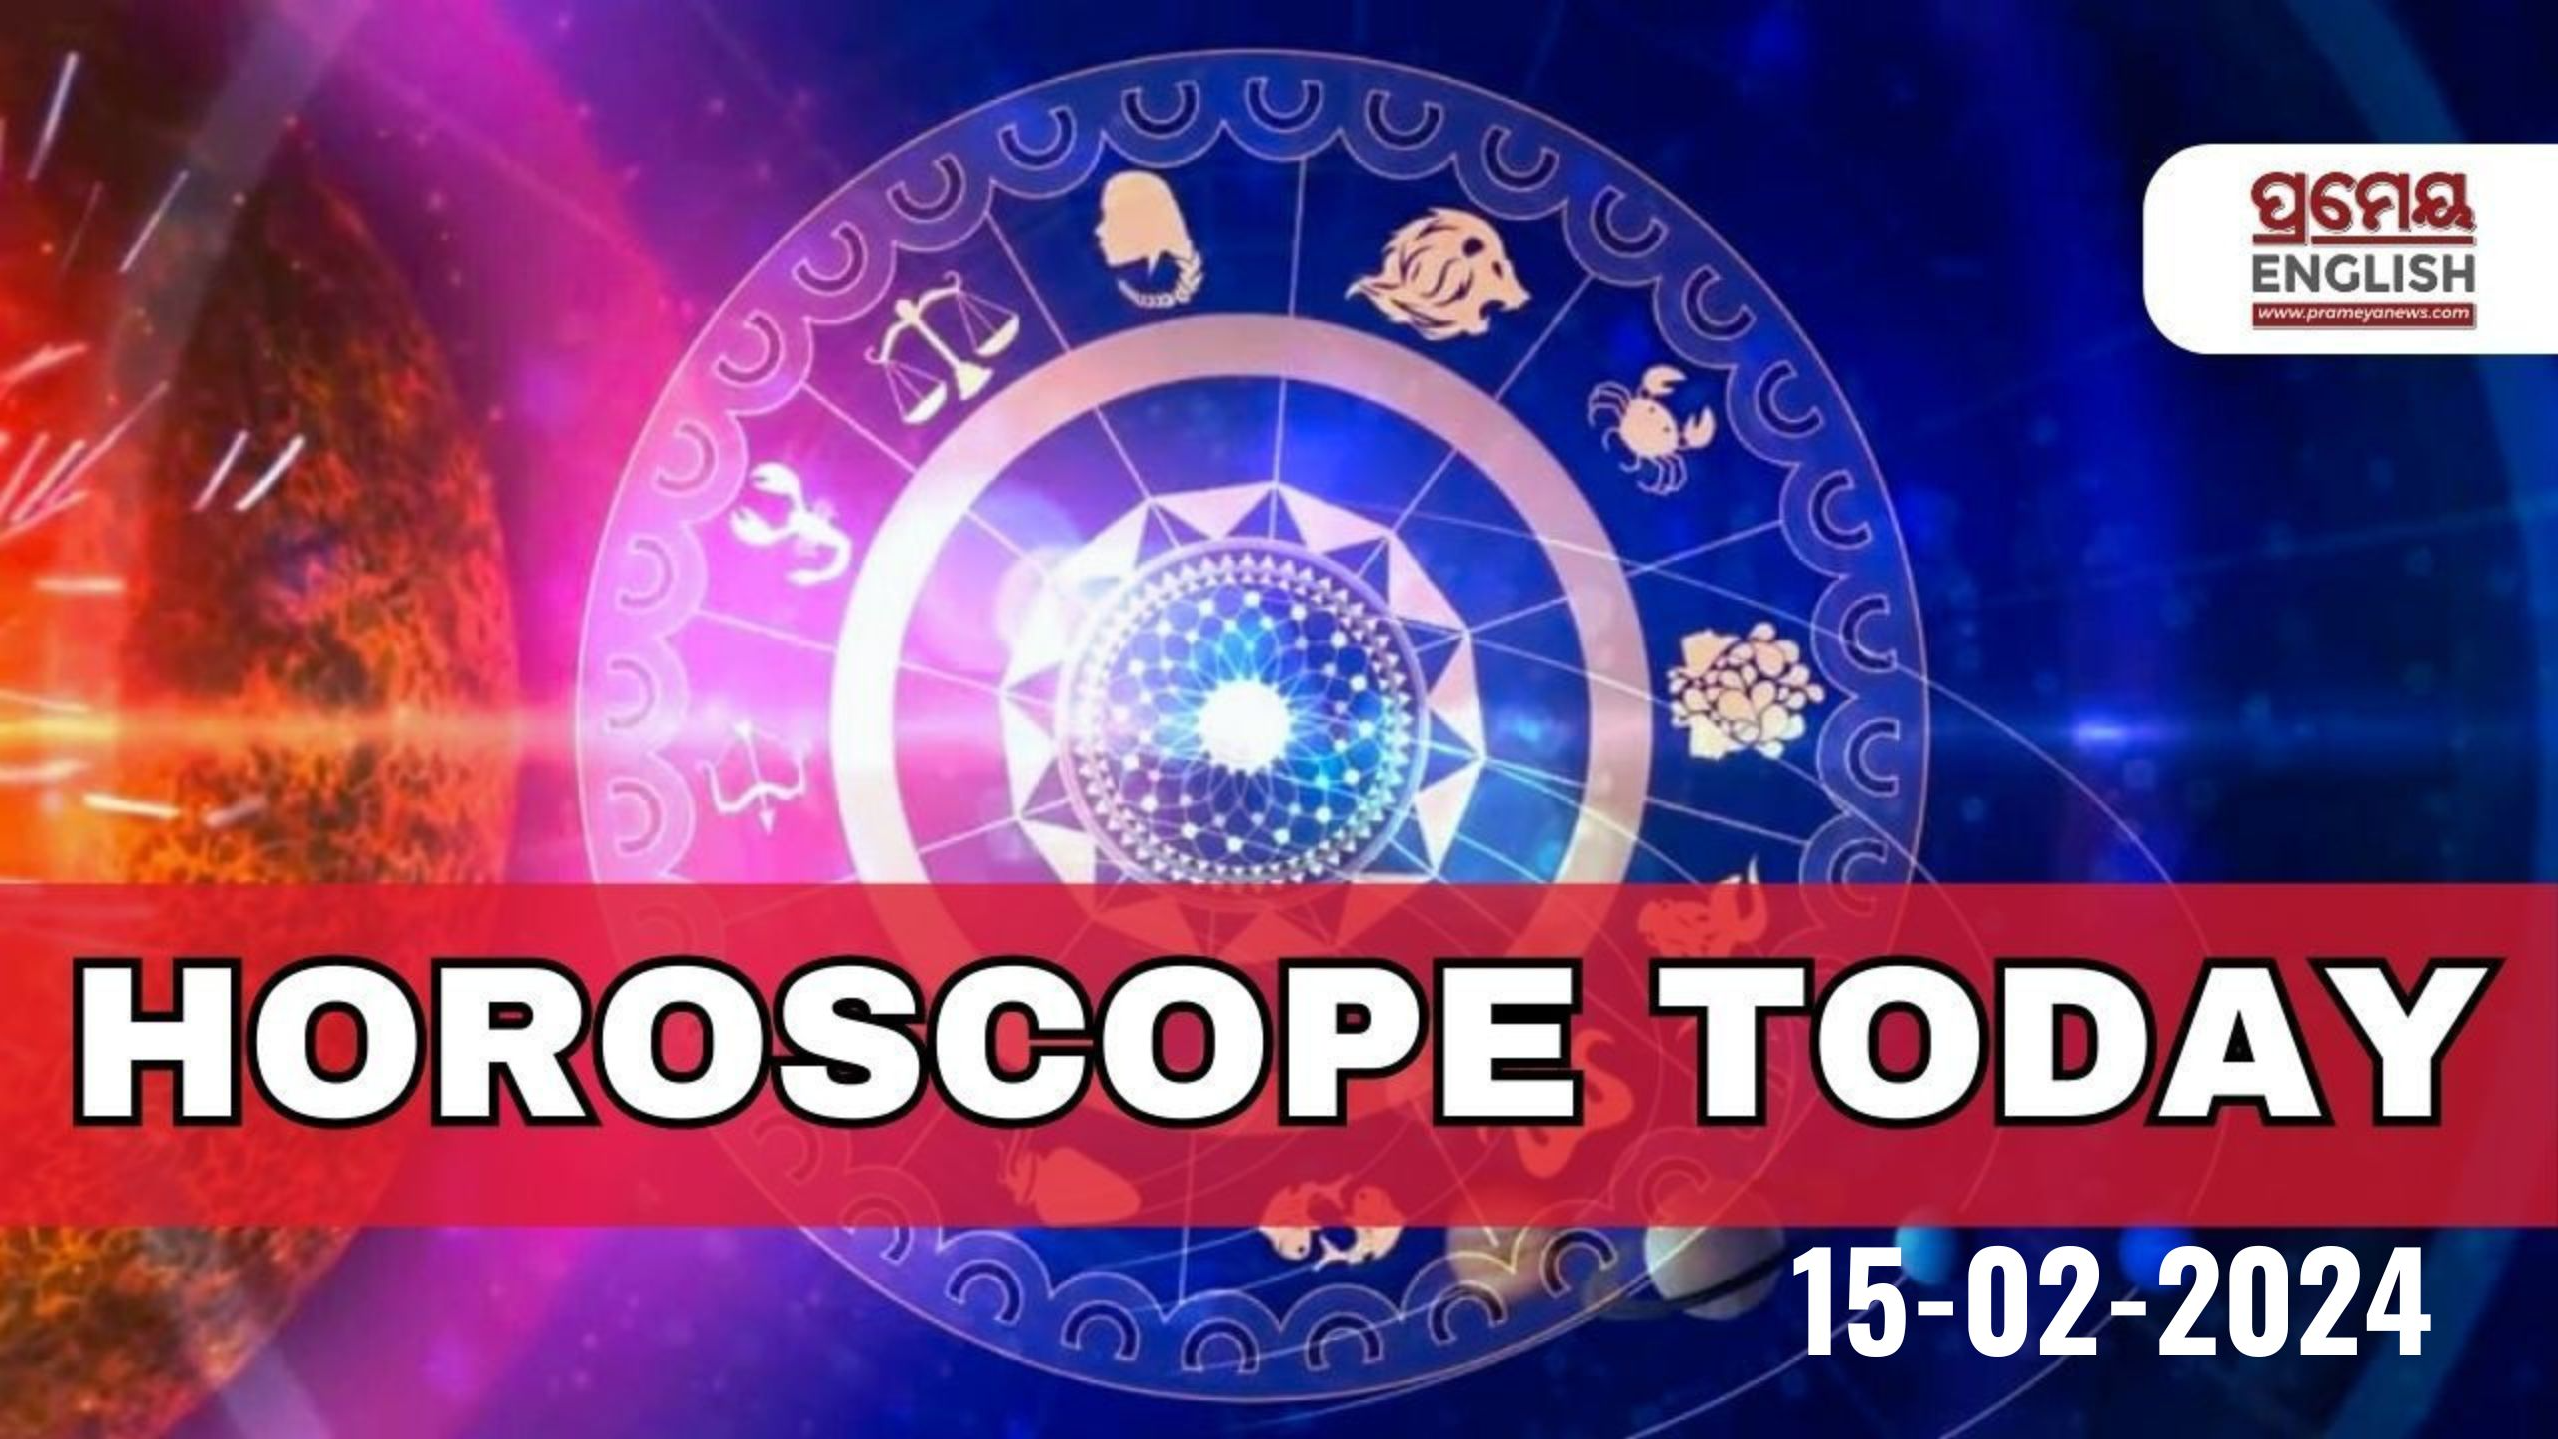 Daily Horoscope: Your Astrological Forecast - January 20, 2024